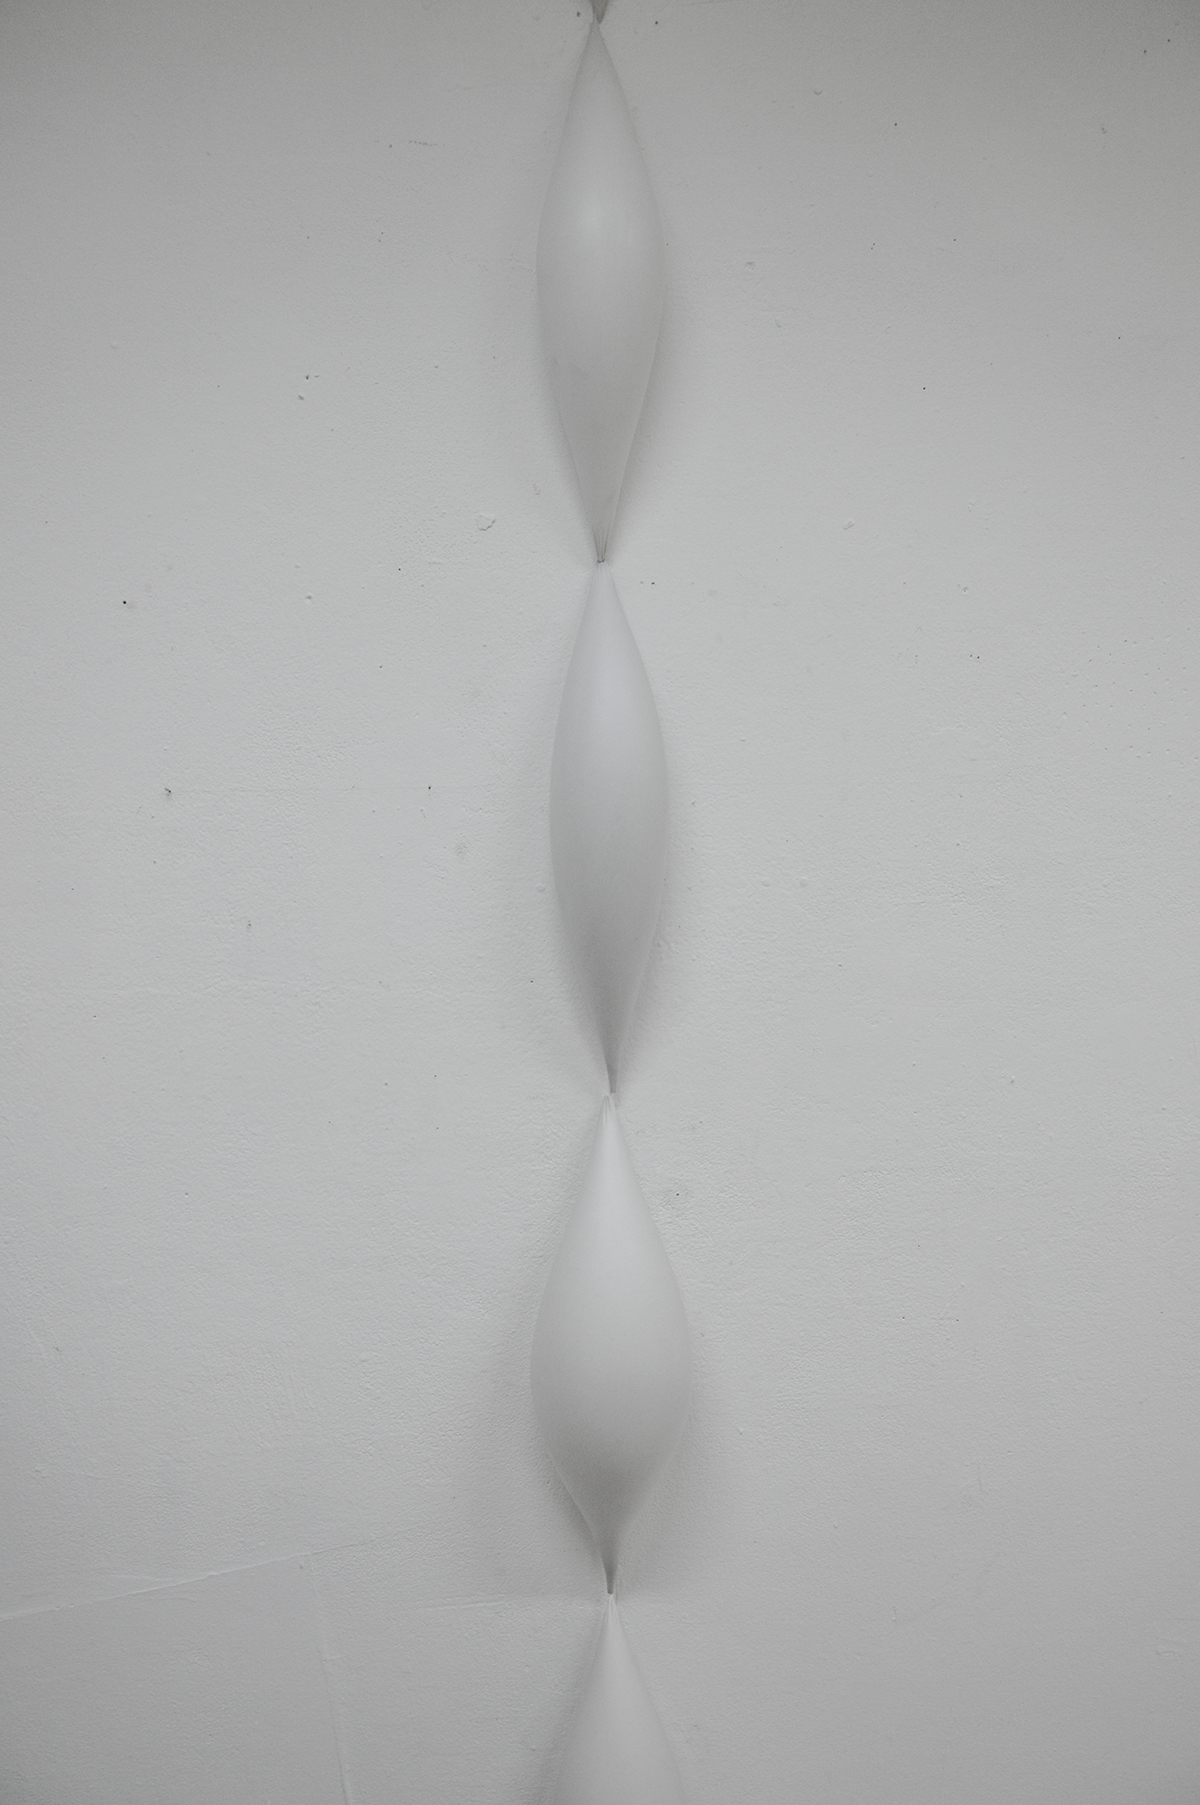 drop goutte organic sculpture White baloon black Space  gravity line plaster art